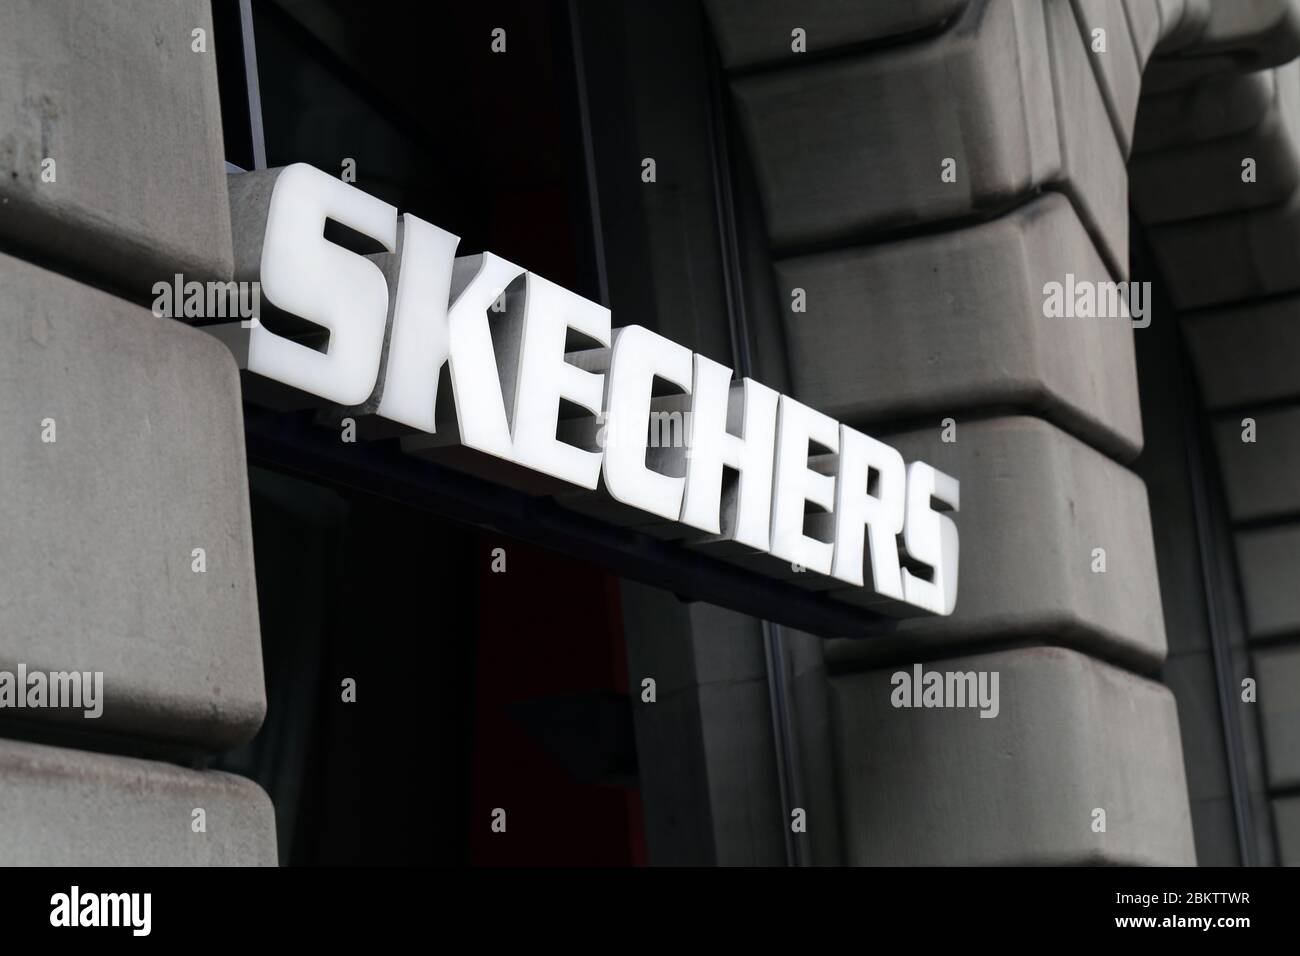 skechers old logo